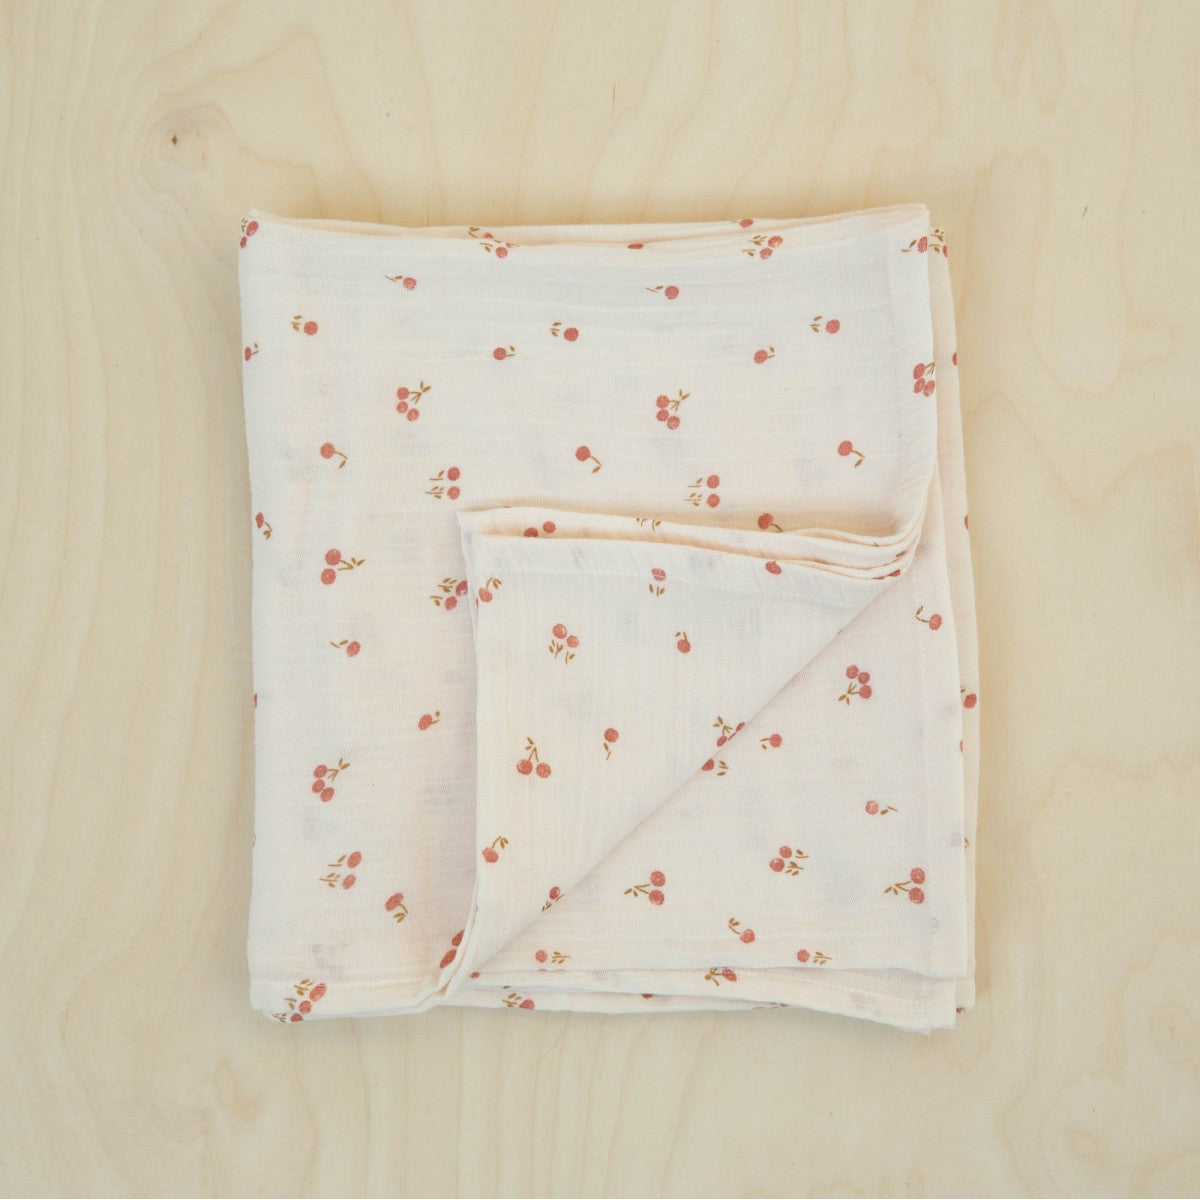 Gabrielle Paris - 有機棉紗布包巾 - Blossom dragée